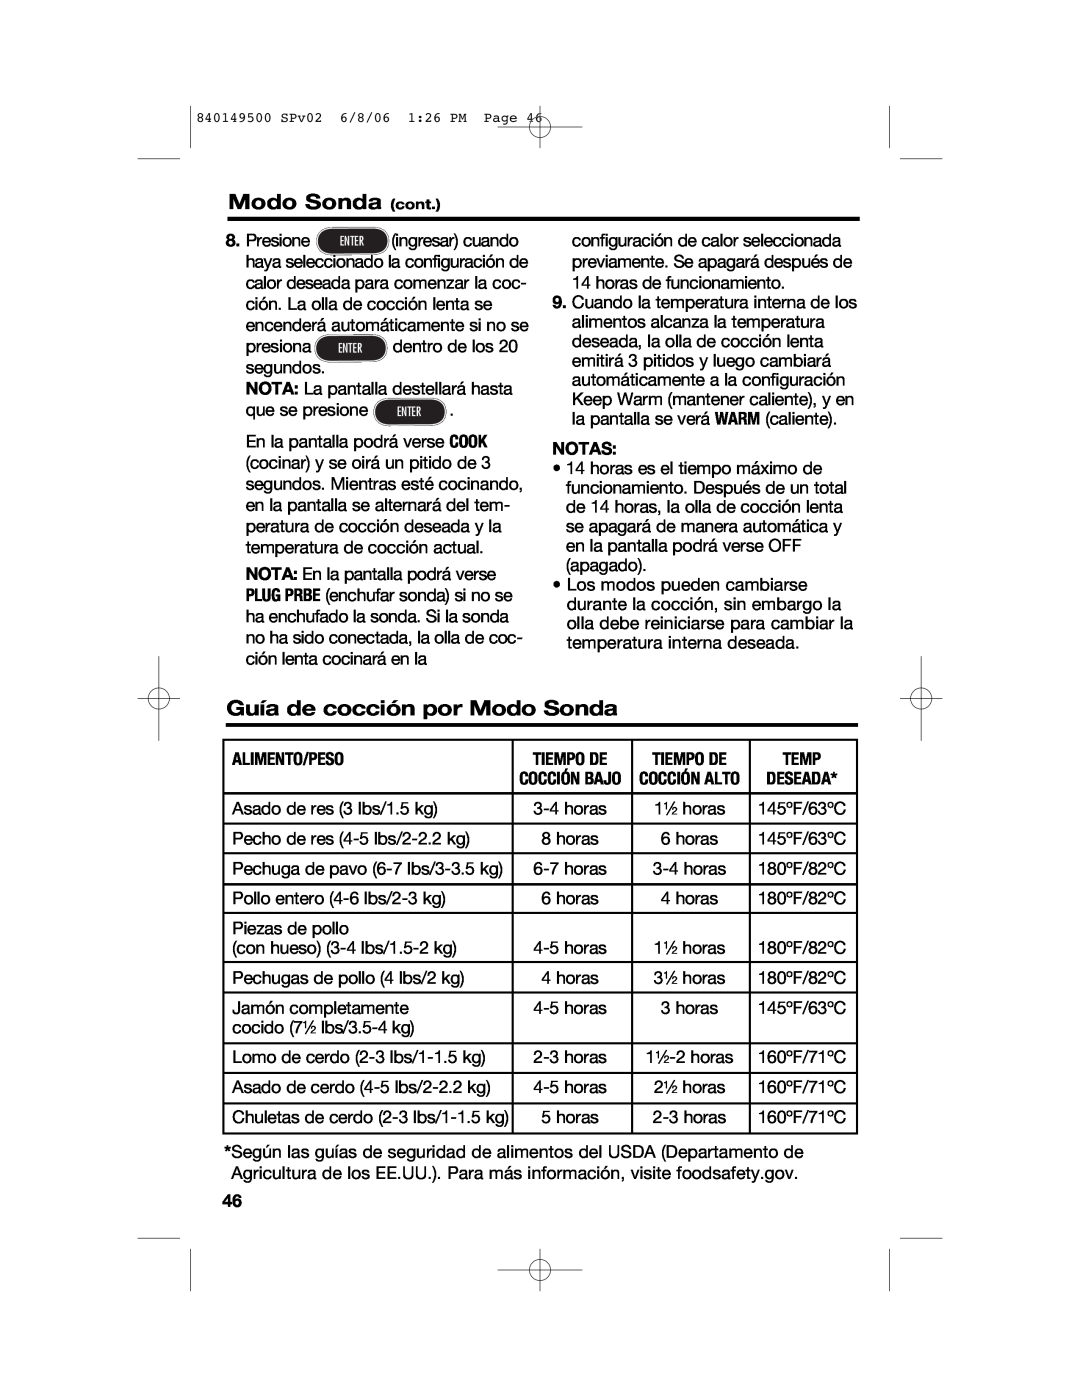 Proctor-Silex 840149500 manual Modo Sonda cont, Guía de cocción por Modo Sonda, Alimento/Peso, Tiempo De, Notas, Temp 